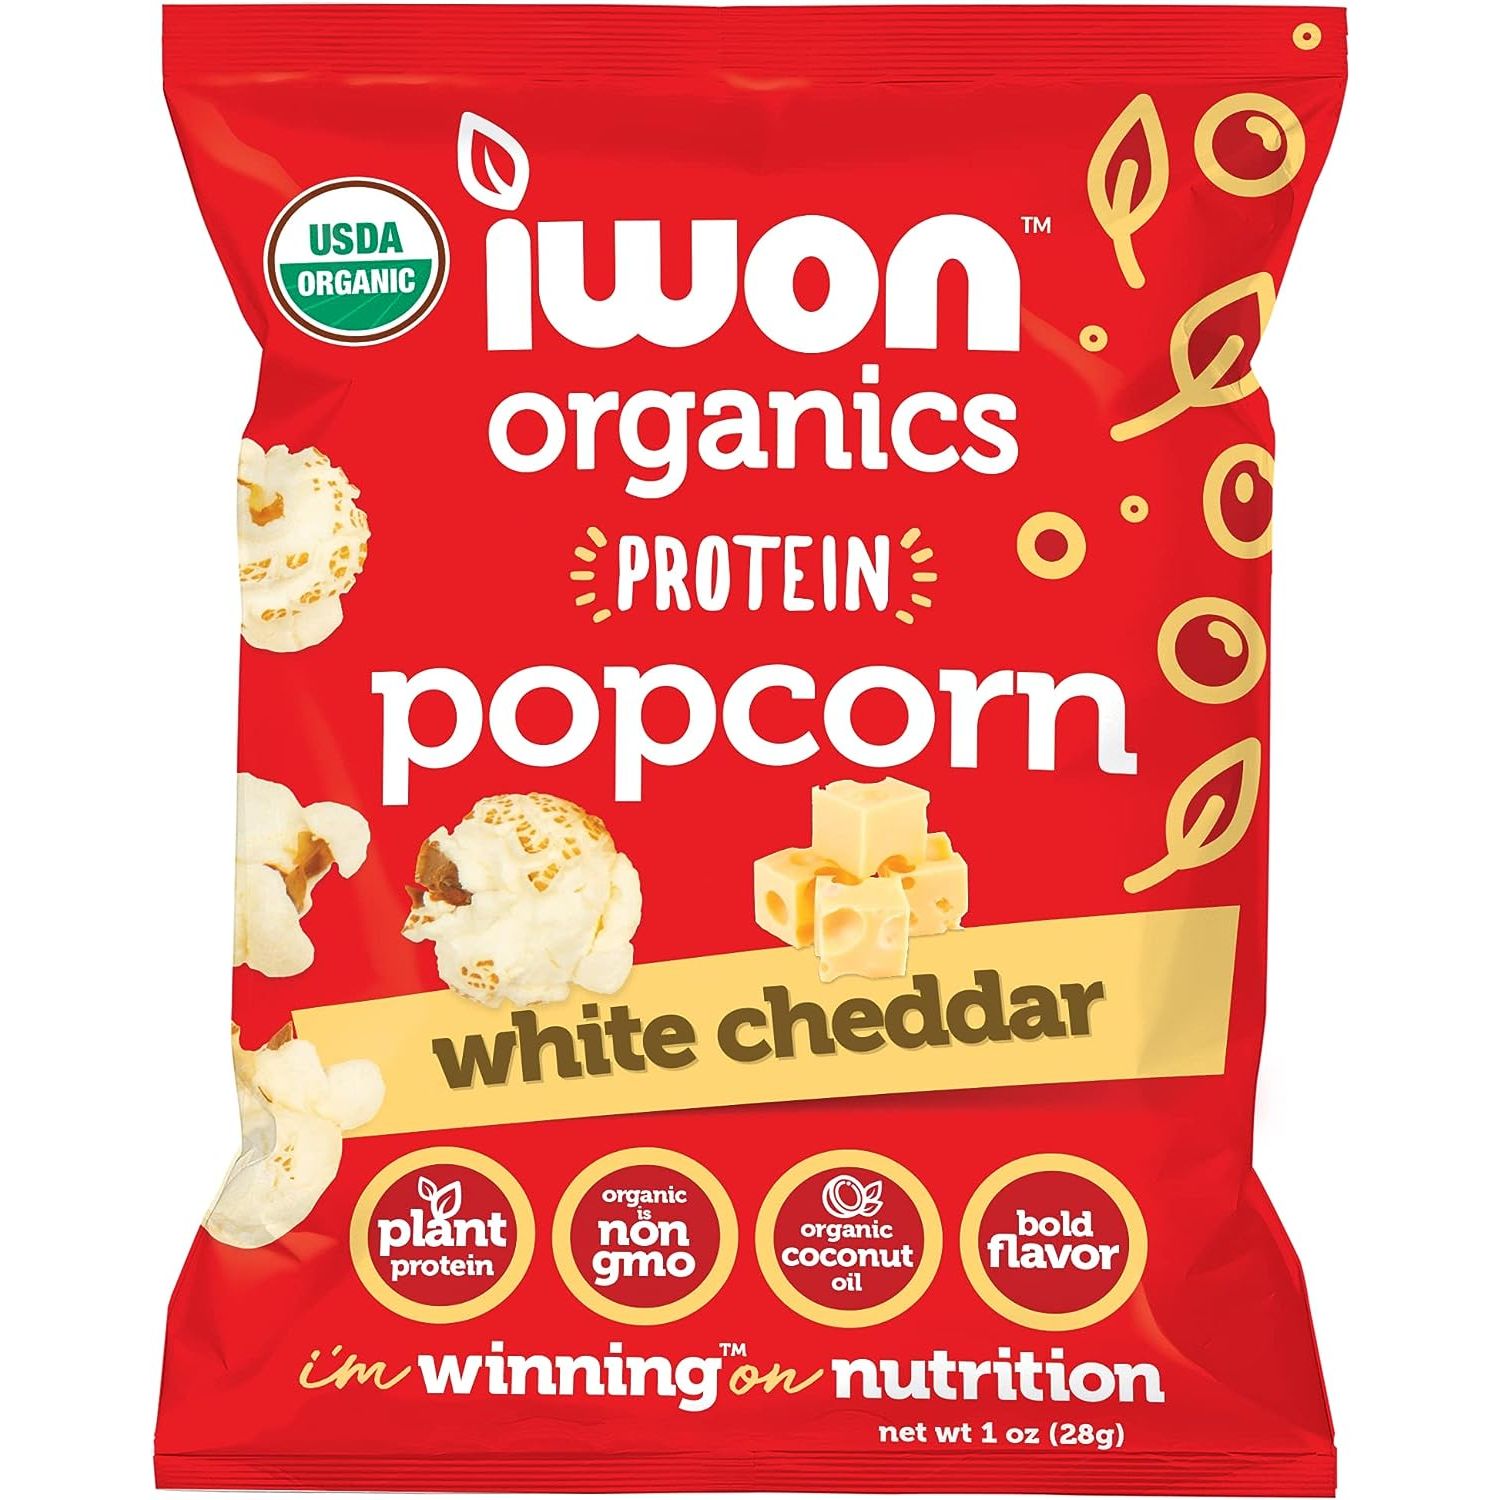 IWON Organics Protein Popcorn (1 bag) Protein Snacks White Cheddar IWON Organics